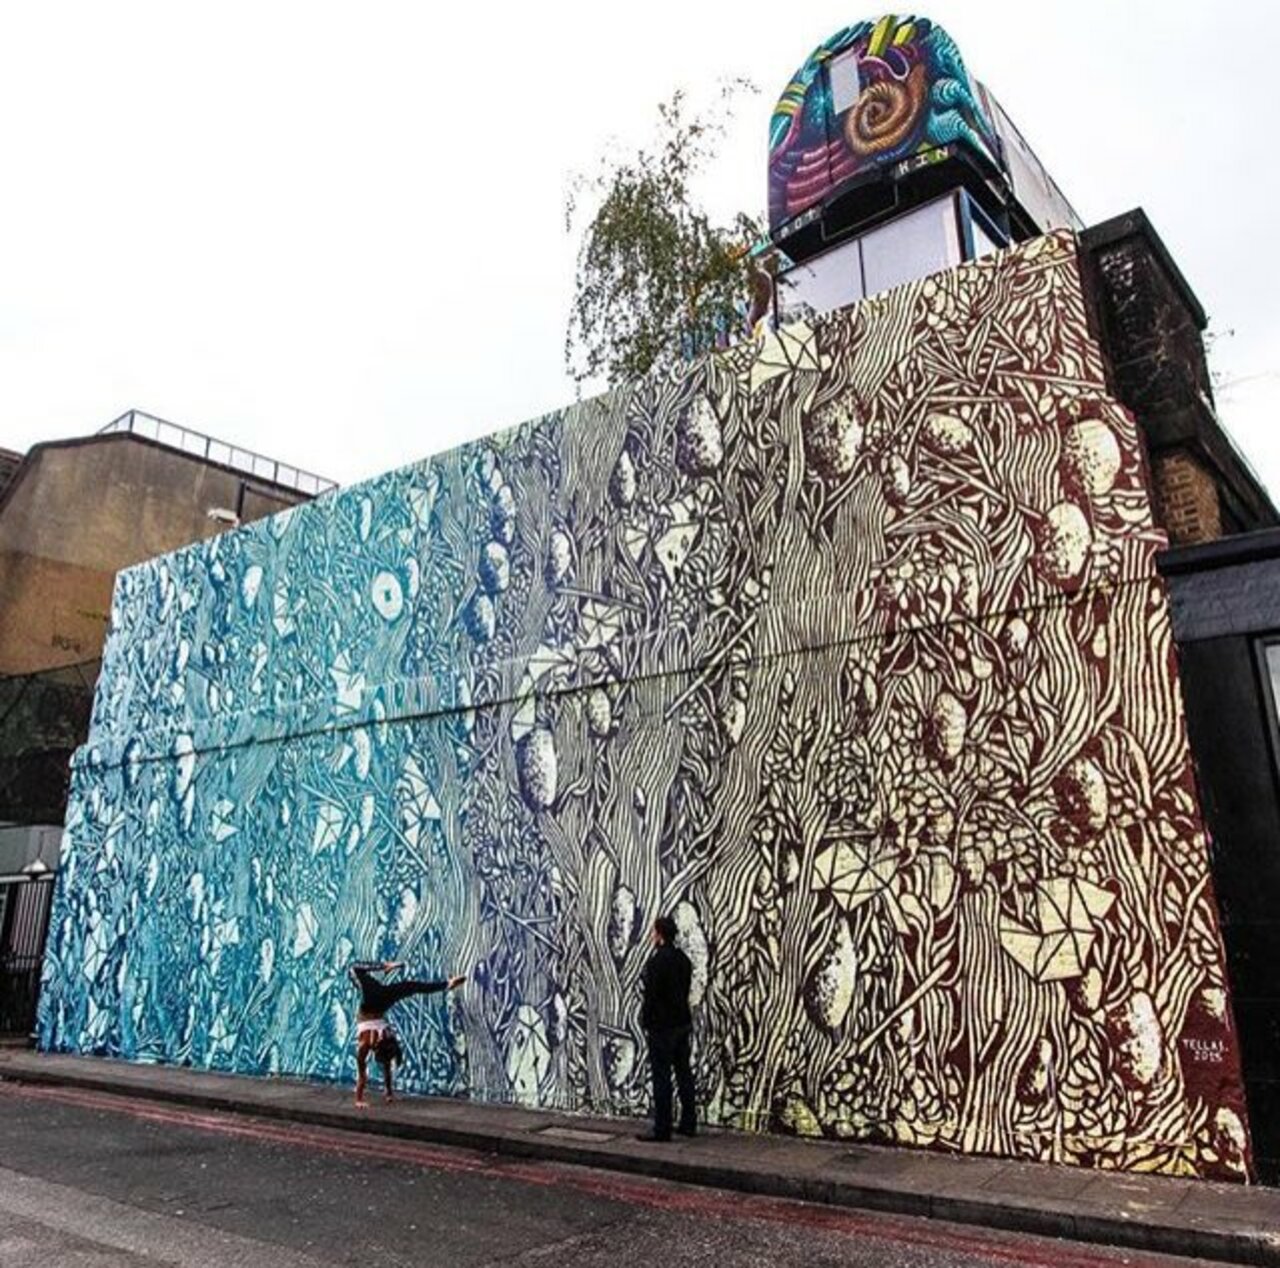 New Street Art by Tellas in Shoreditch London 

#art #graffiti #mural #streetart https://t.co/QhYQIzcFsq